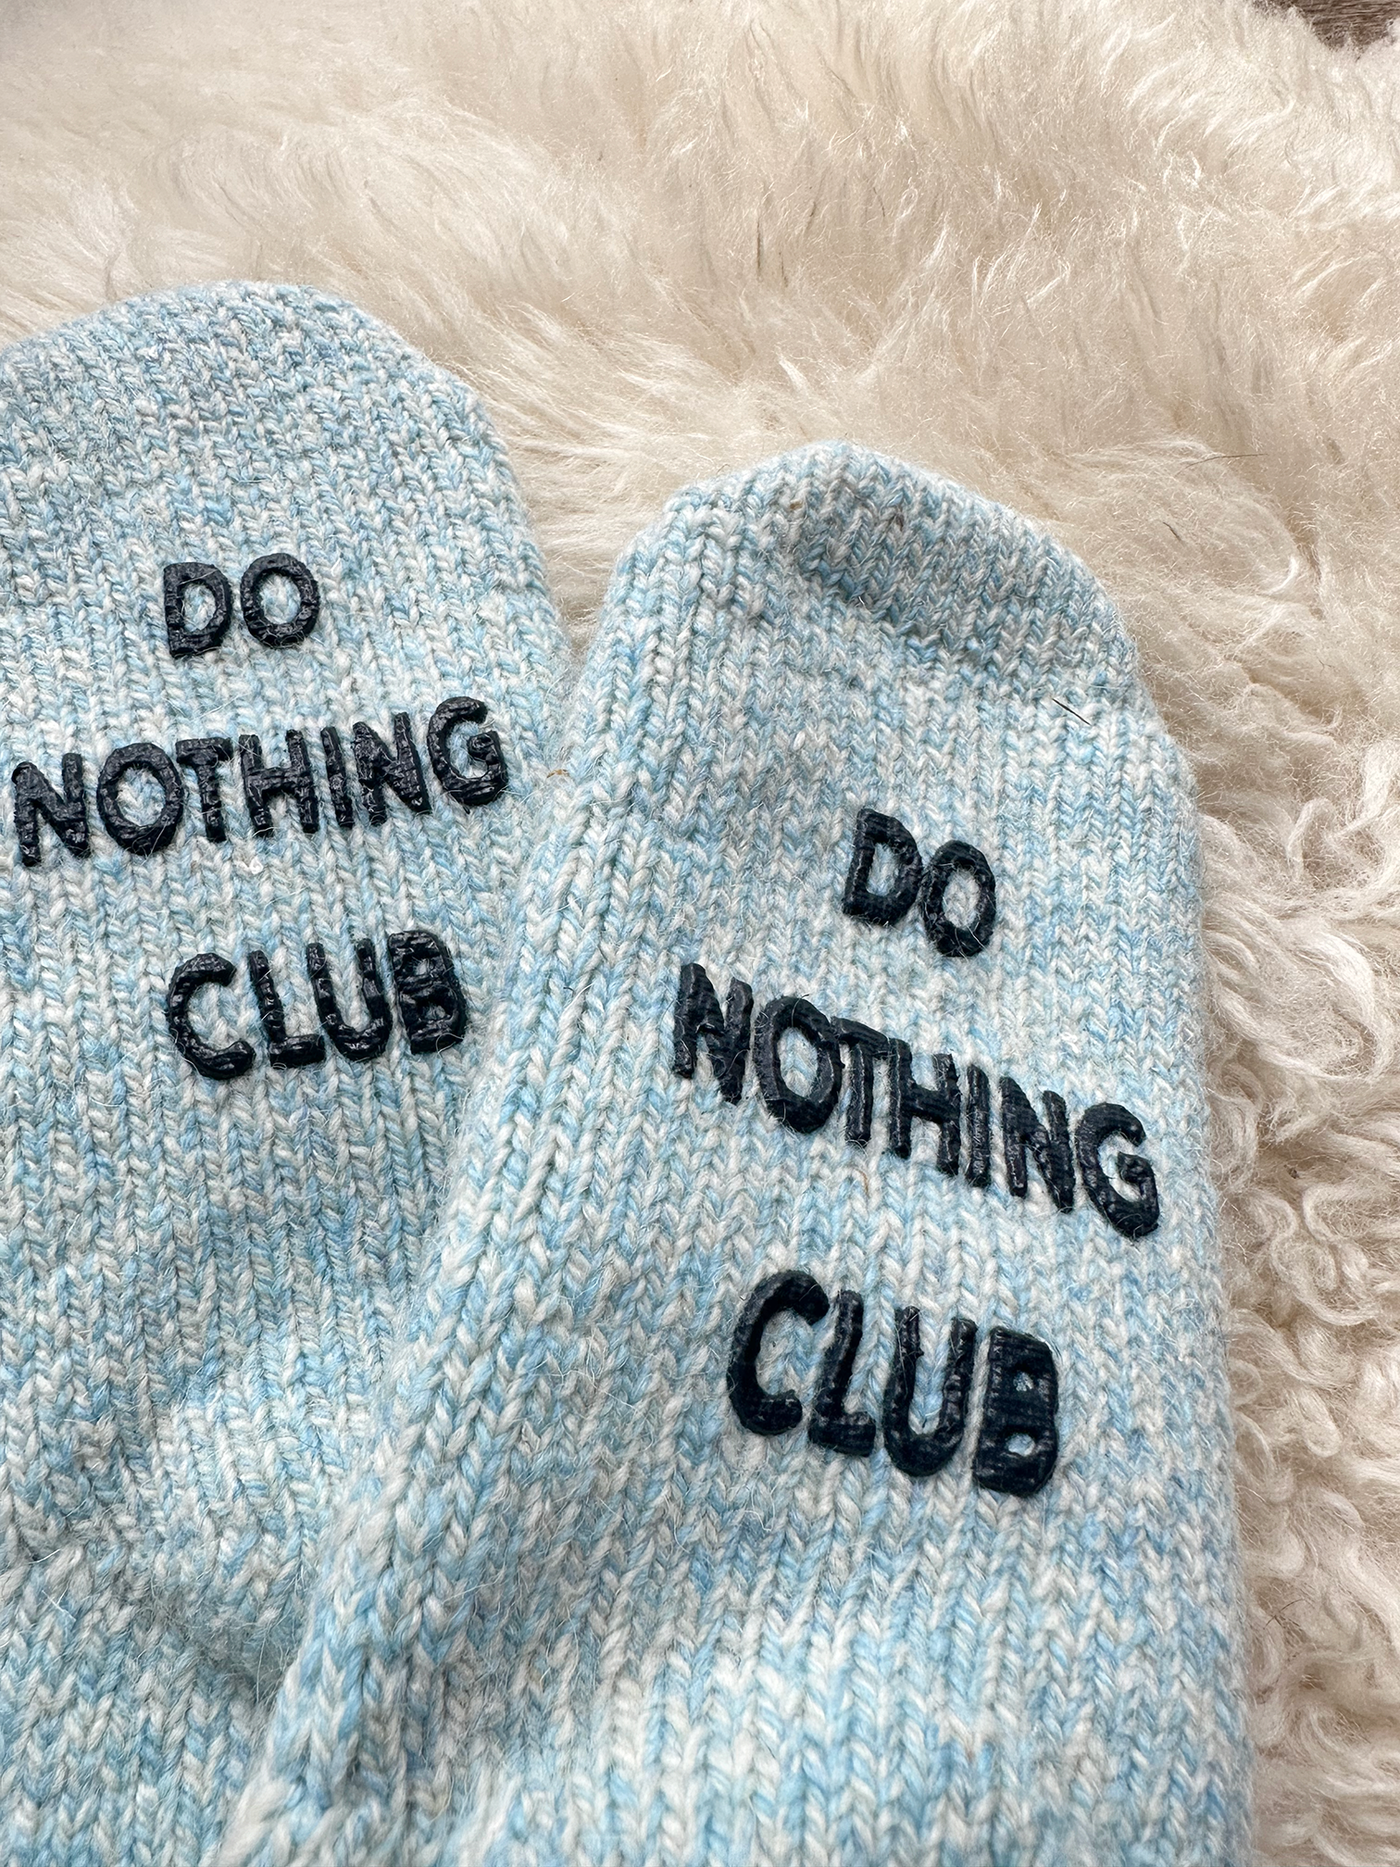 DO NOTHING CLUB